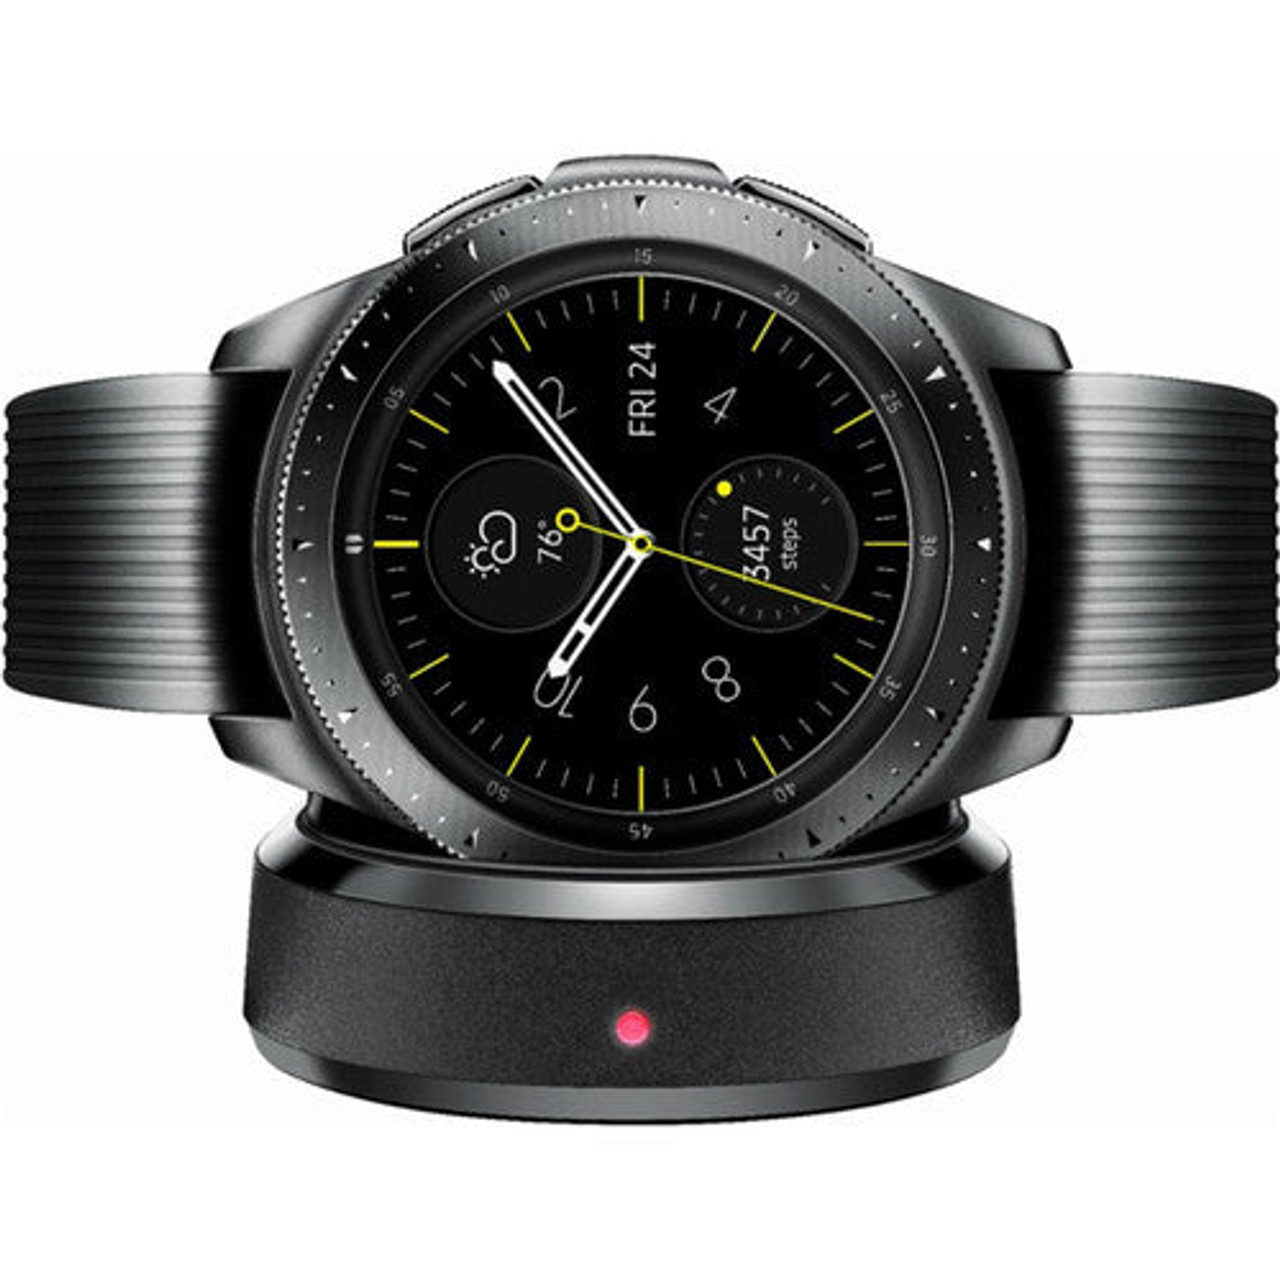 Samsung SM-R815UZKAXAR-RB Galaxy Watch 42mm 4G LTE Black